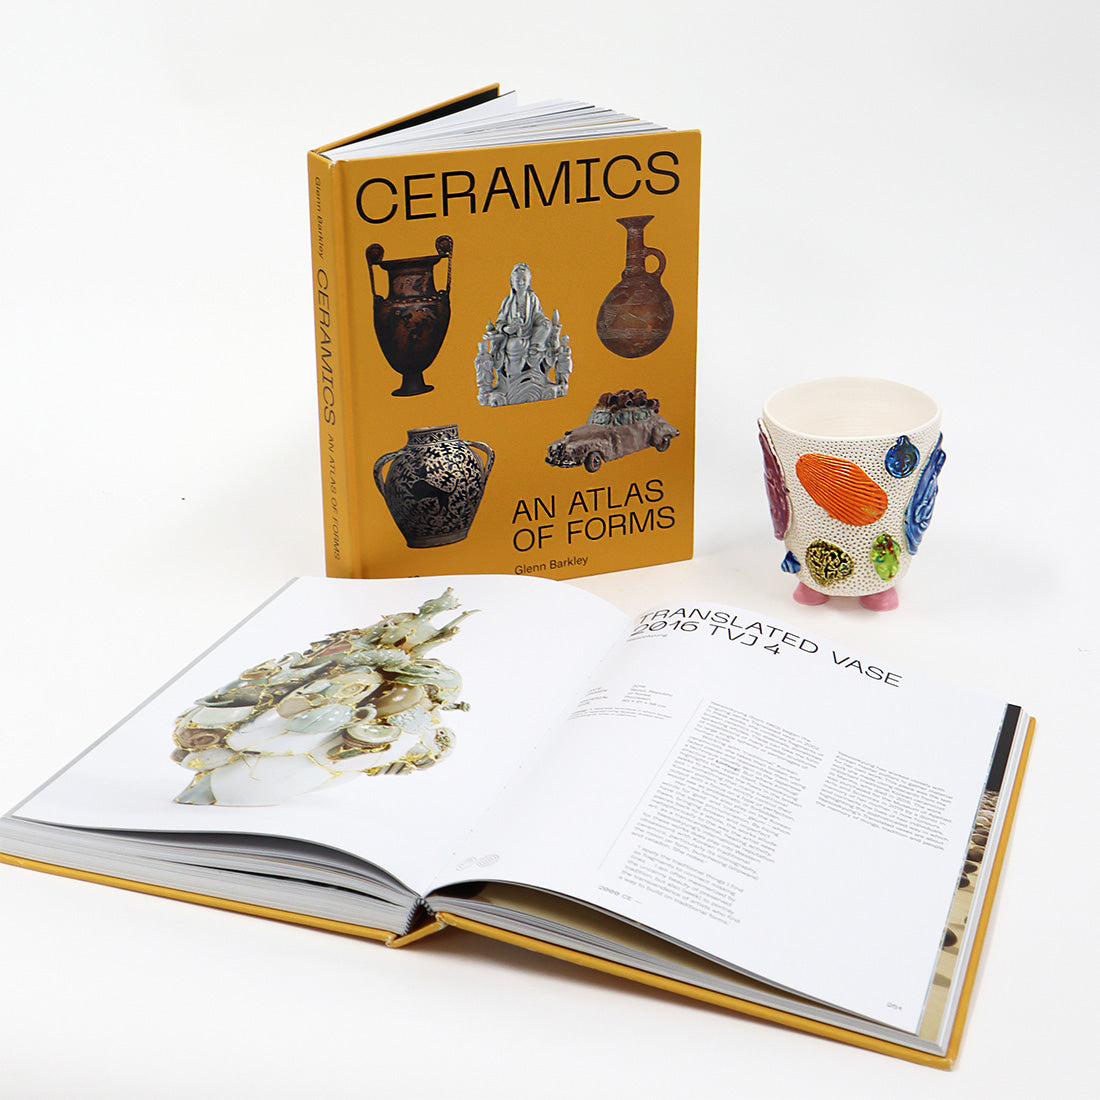 Ceramics: An Atlas of Forms by Glenn Barkley [Special Edition]